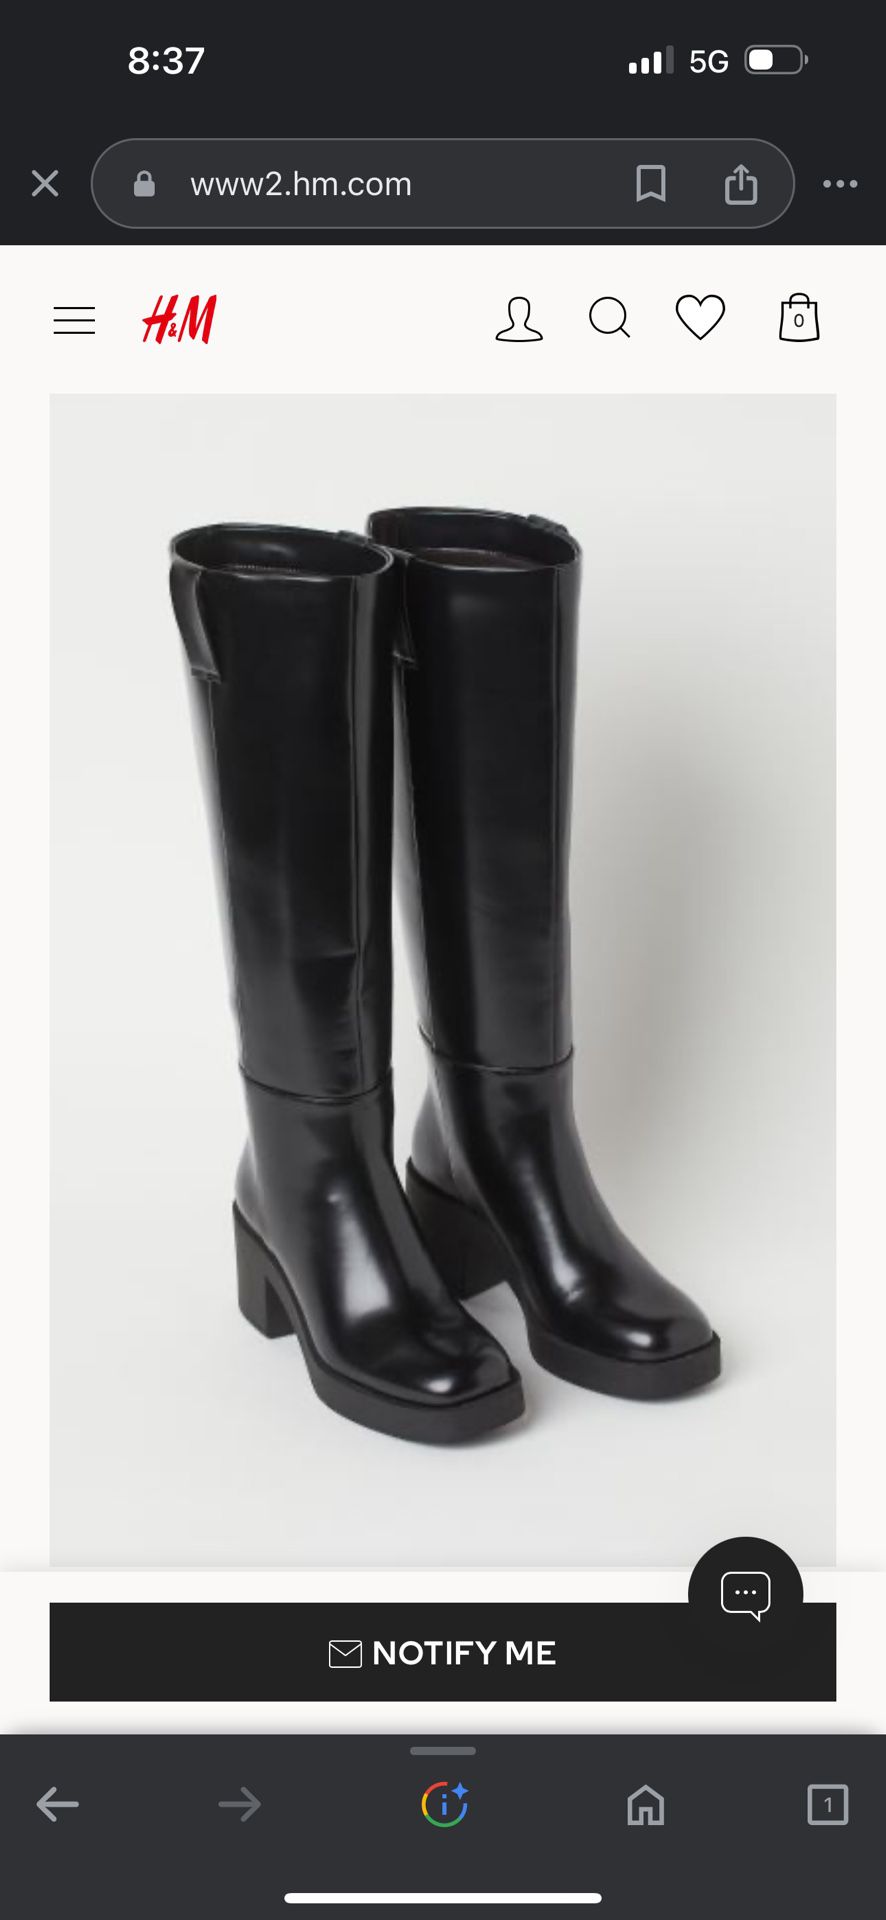 Black knee-high boots 